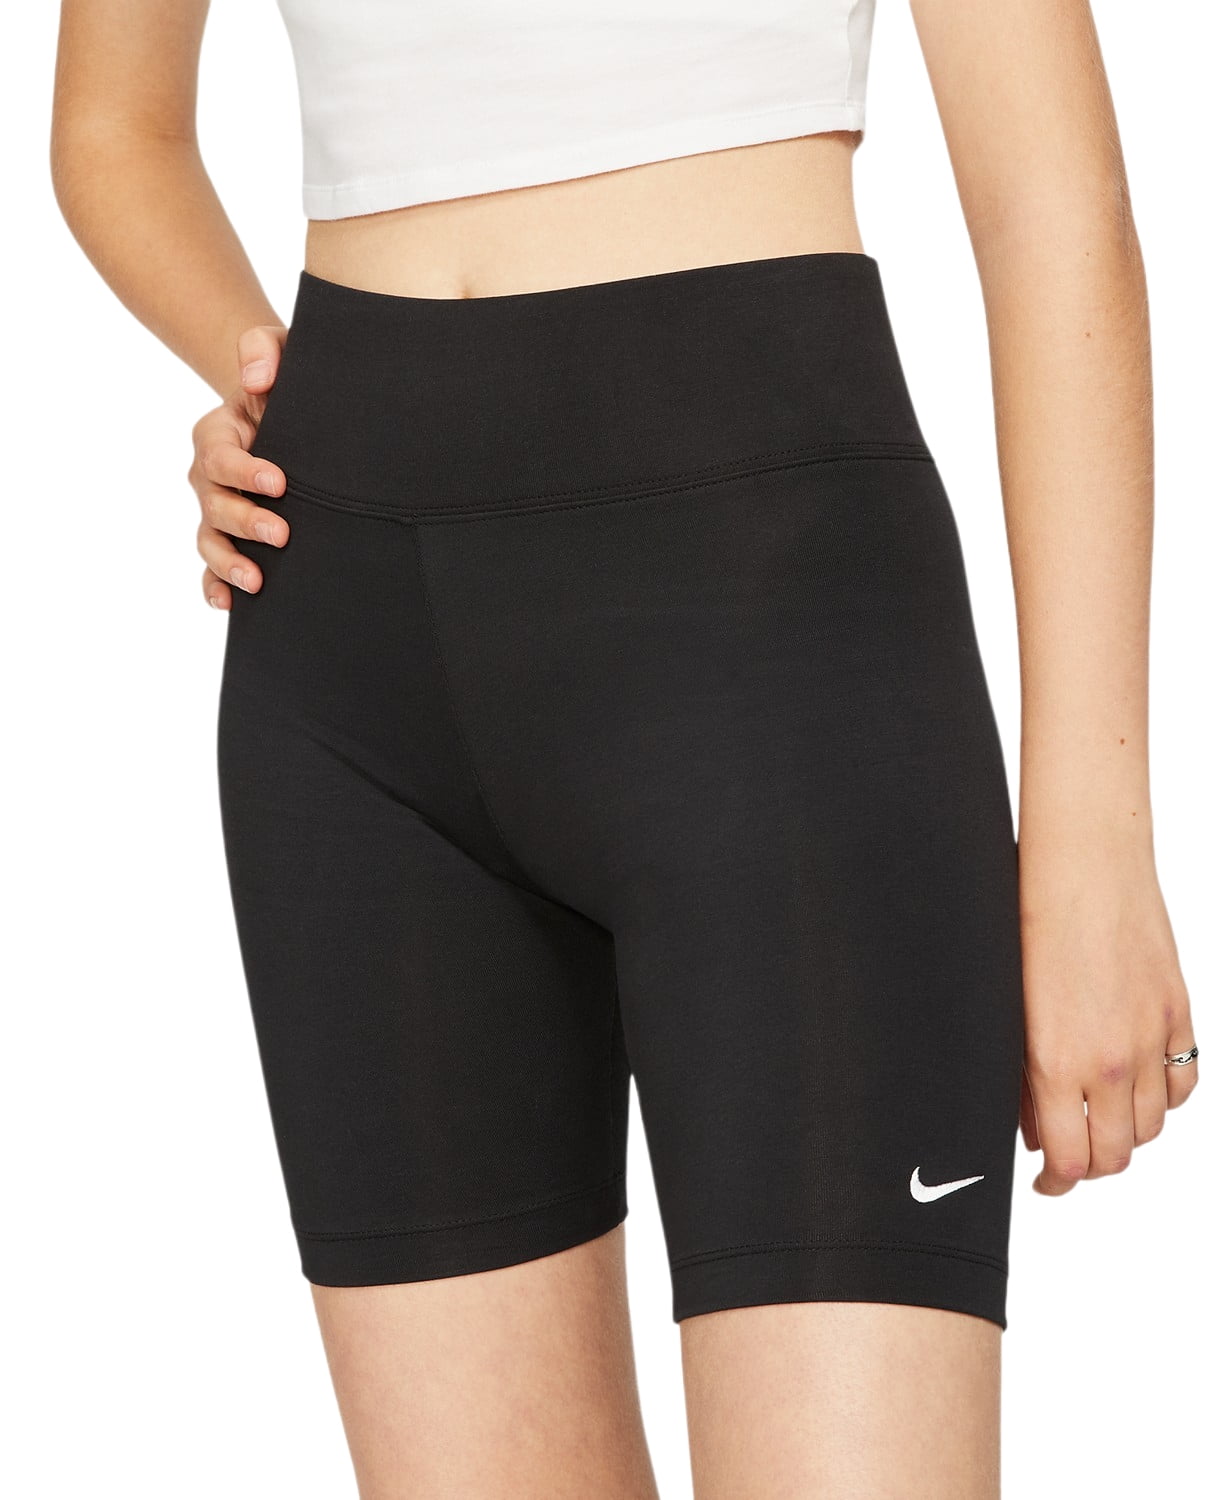 bremse Kro halvø Nike Women's Athletic Sportswear Leg-A-See Bike Shorts, Black, XS -  Walmart.com